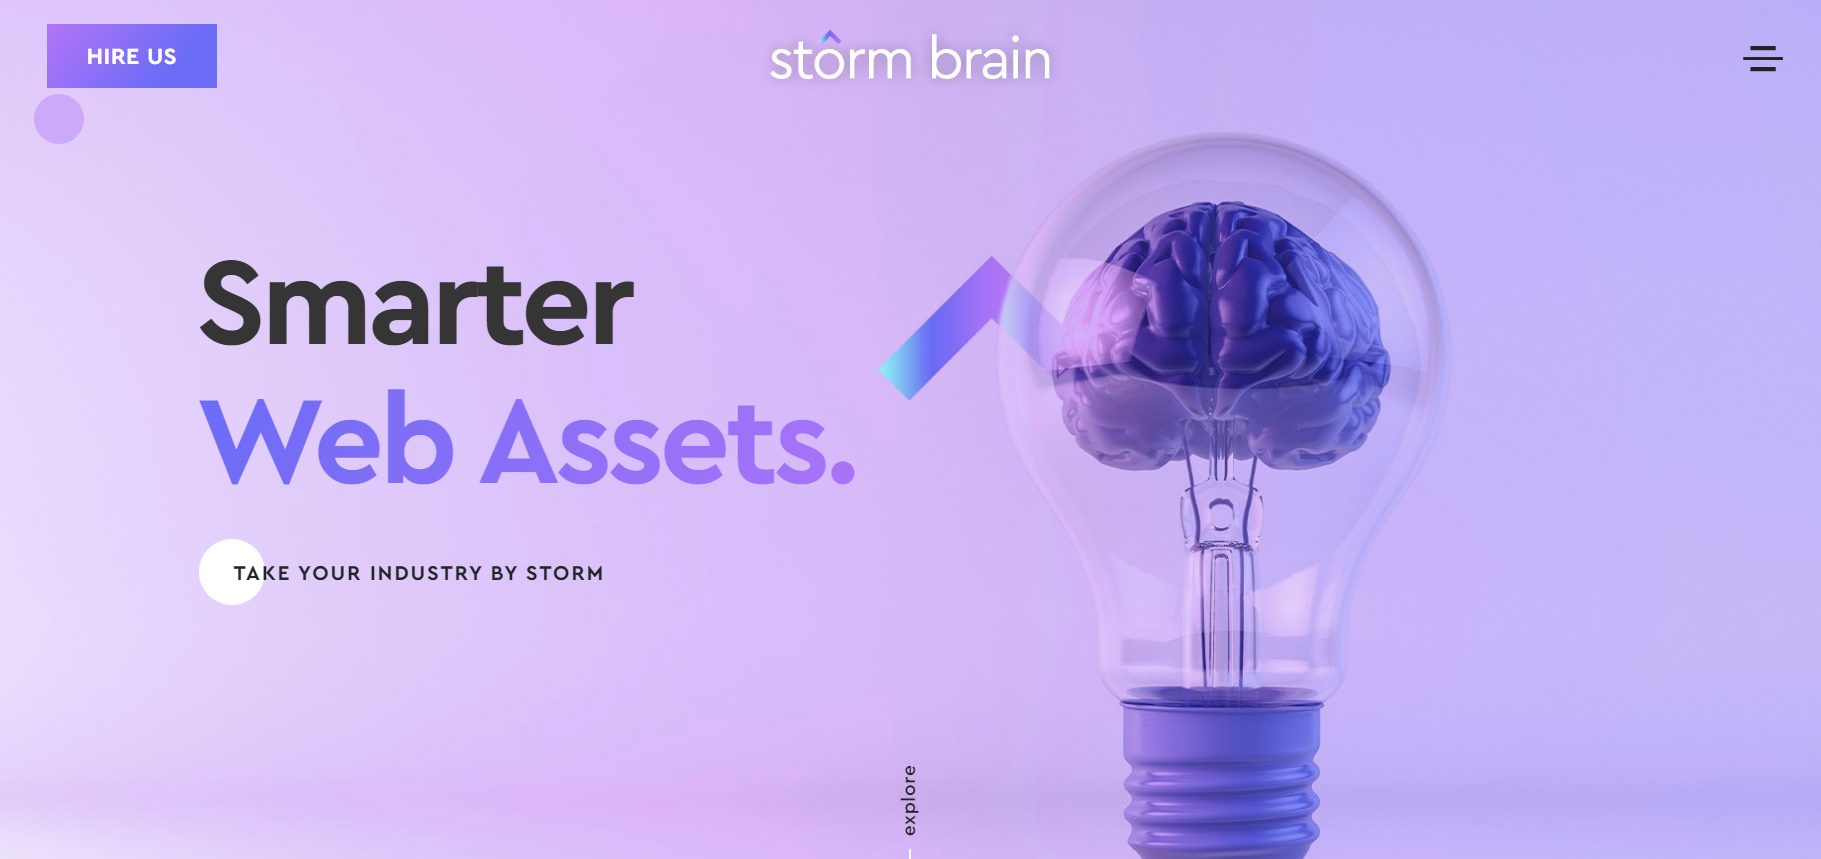 Storm Brain